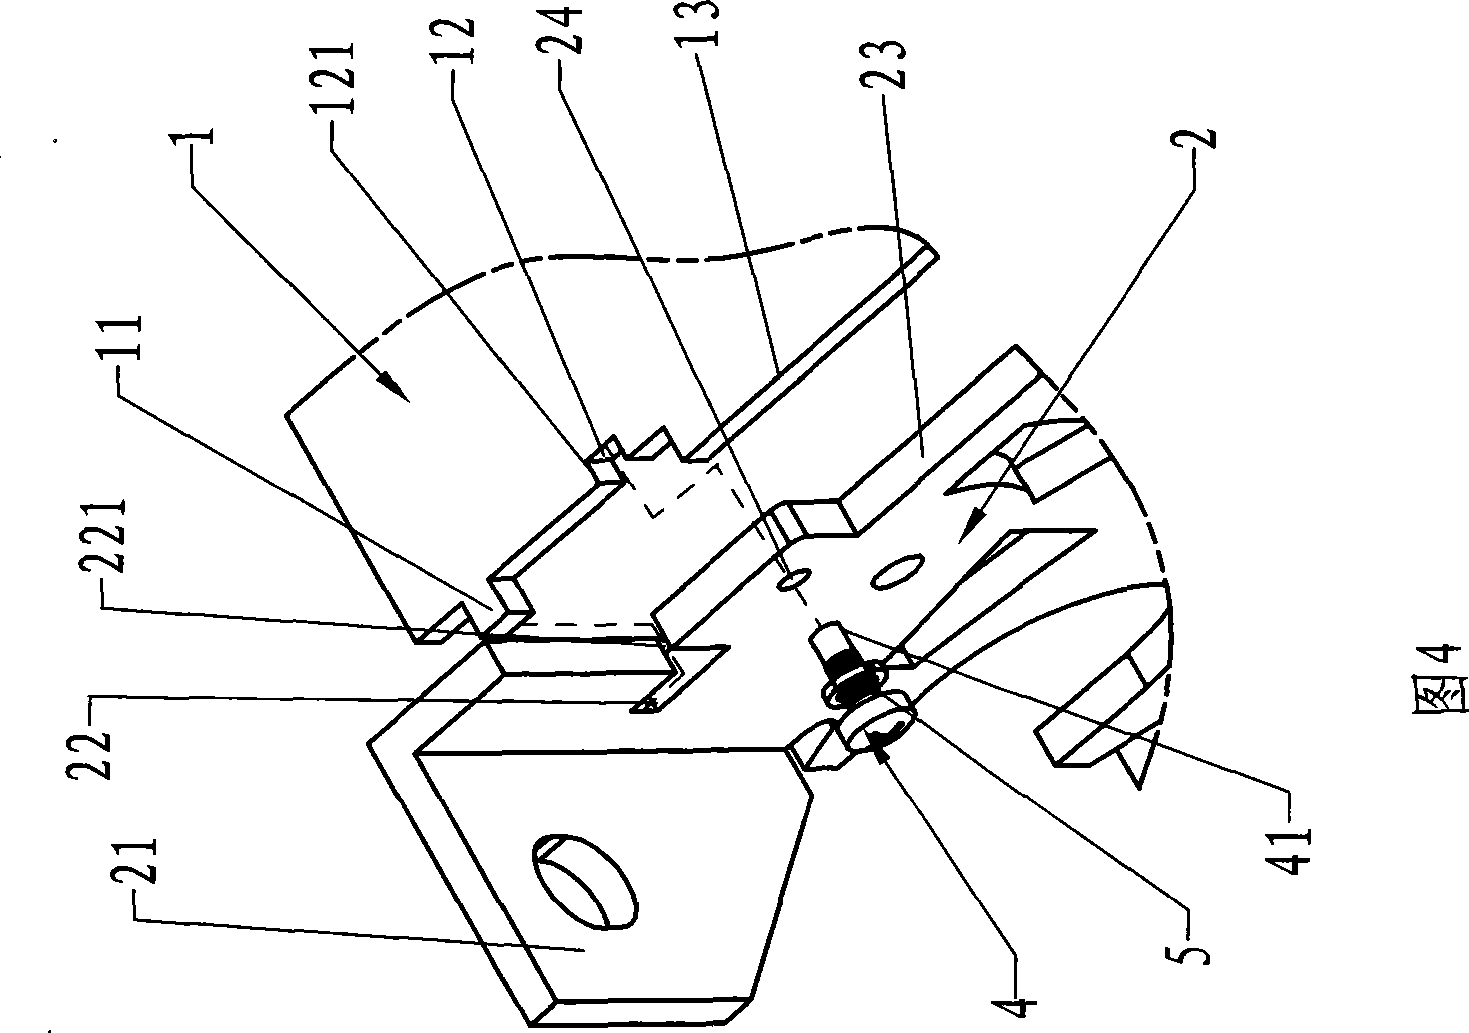 Operating mechanism for circuit breaker